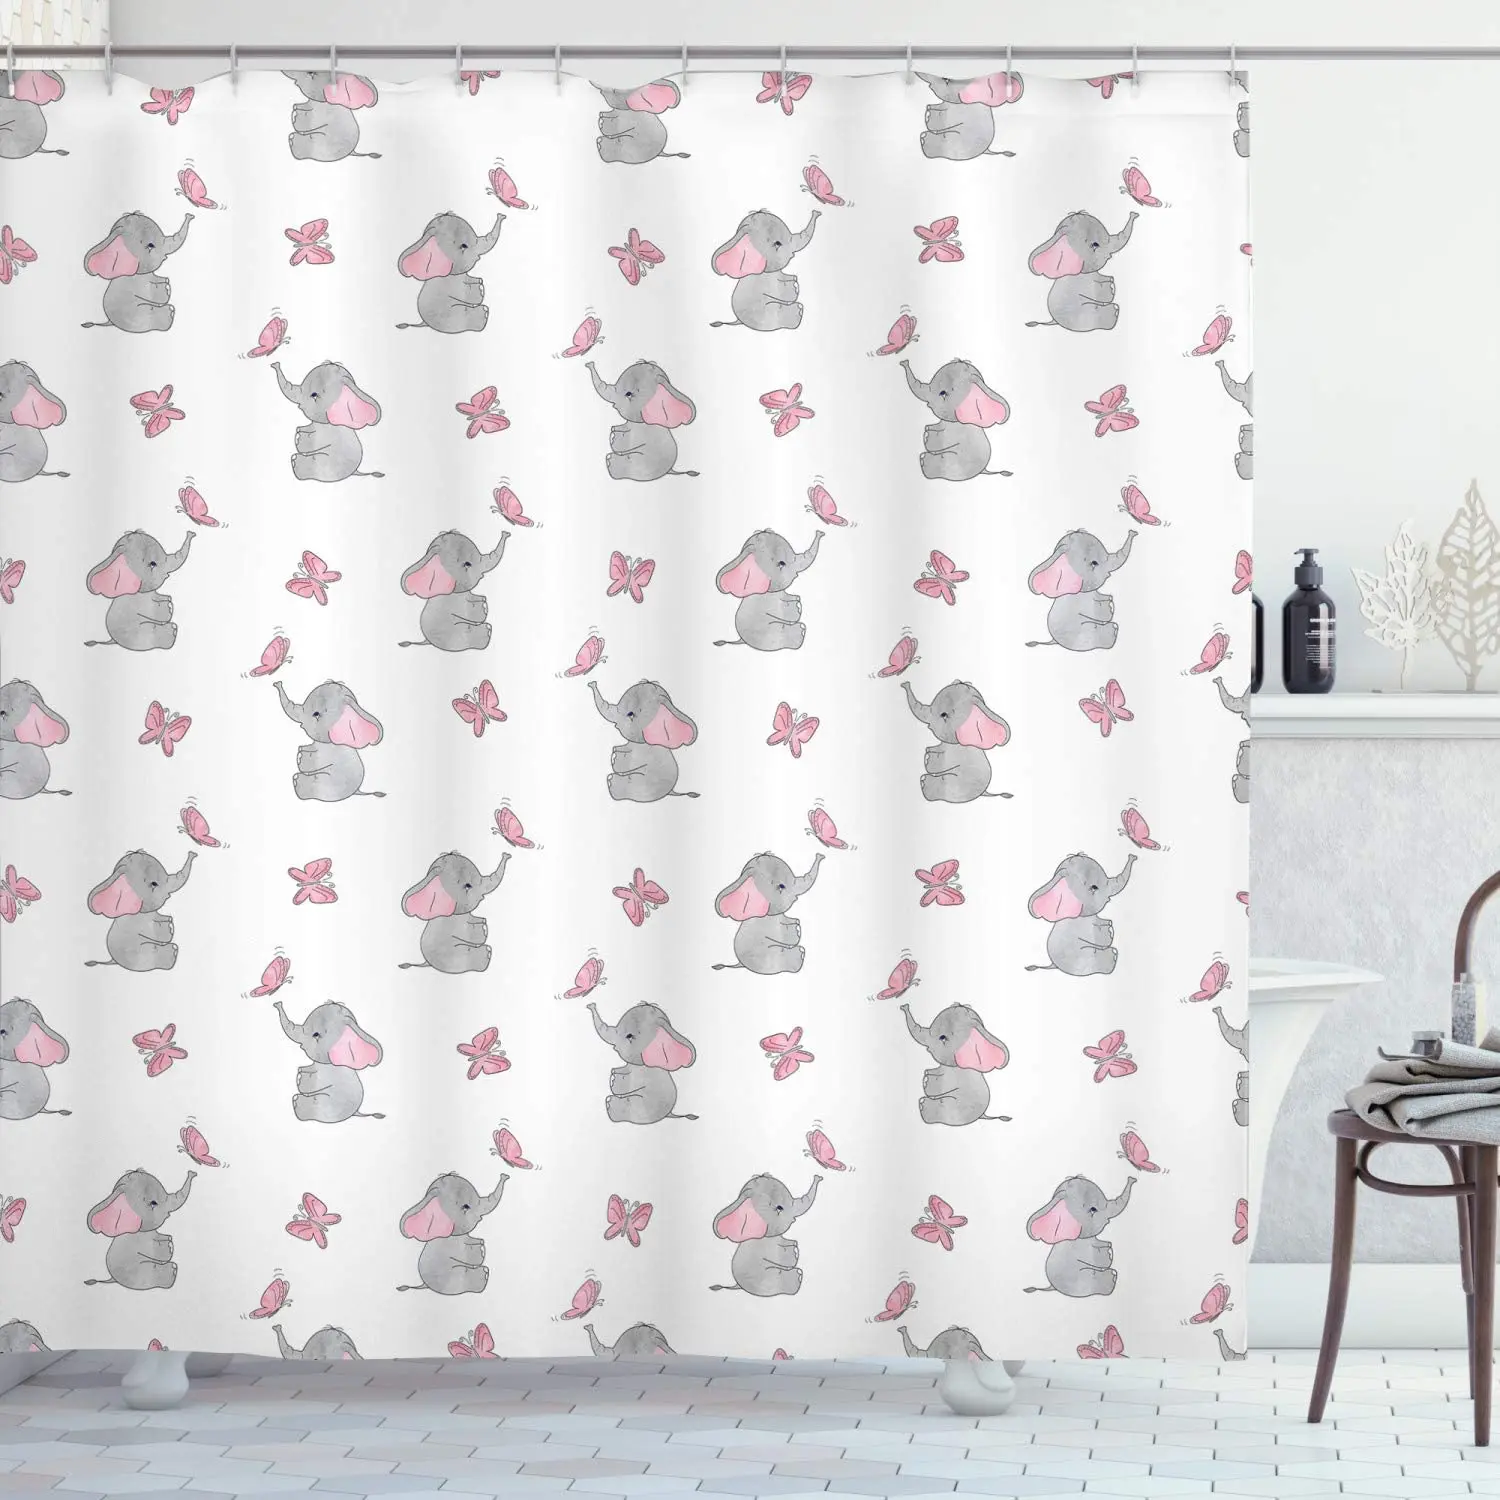 

Elephant Nursery Shower Curtain, Baby Elephants Playing with Butterflies Design Pattern, Cloth Fabric Bathroom Decor S